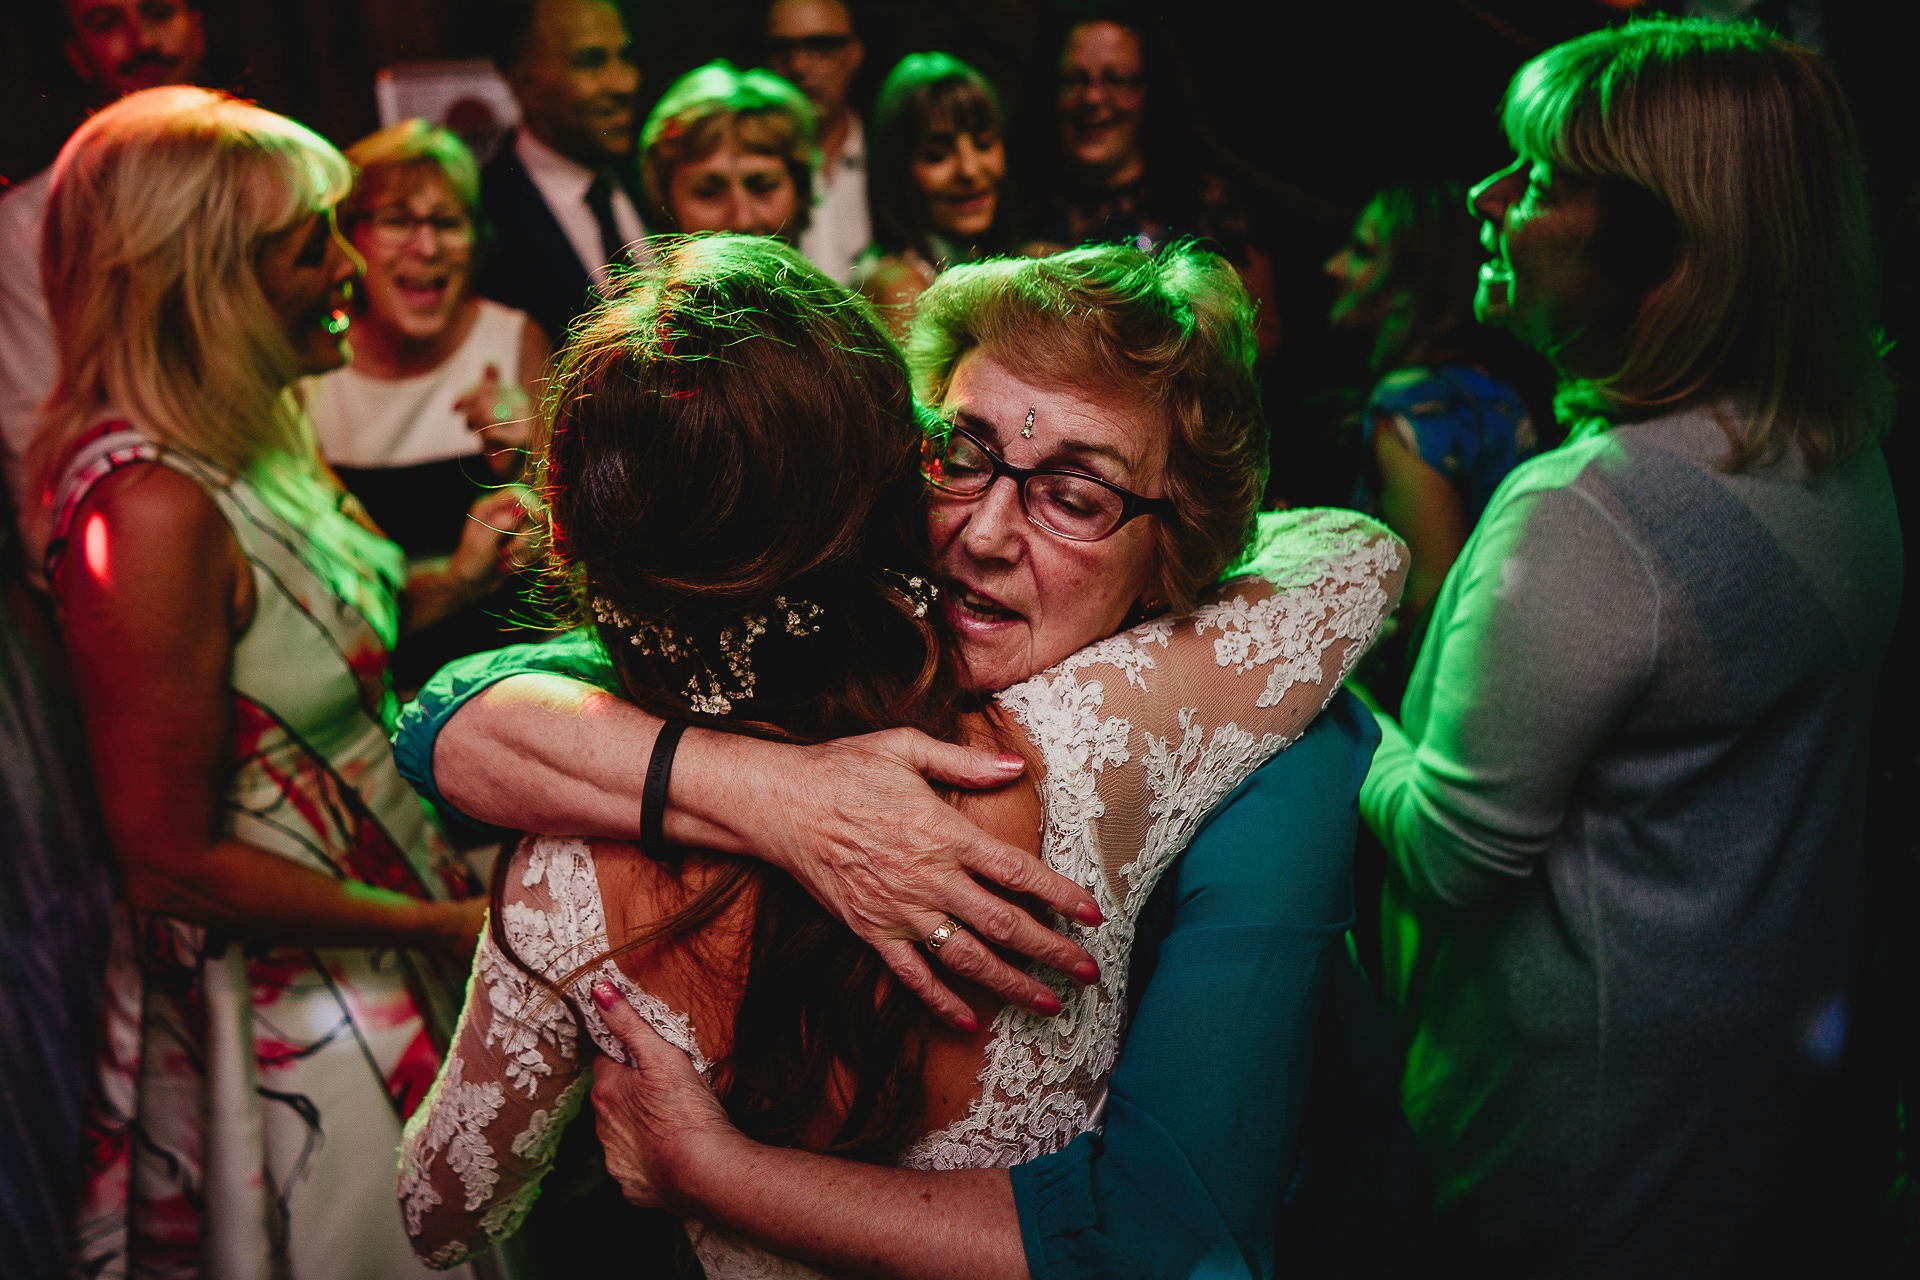 Grandmother cuddling bride on the dance floor